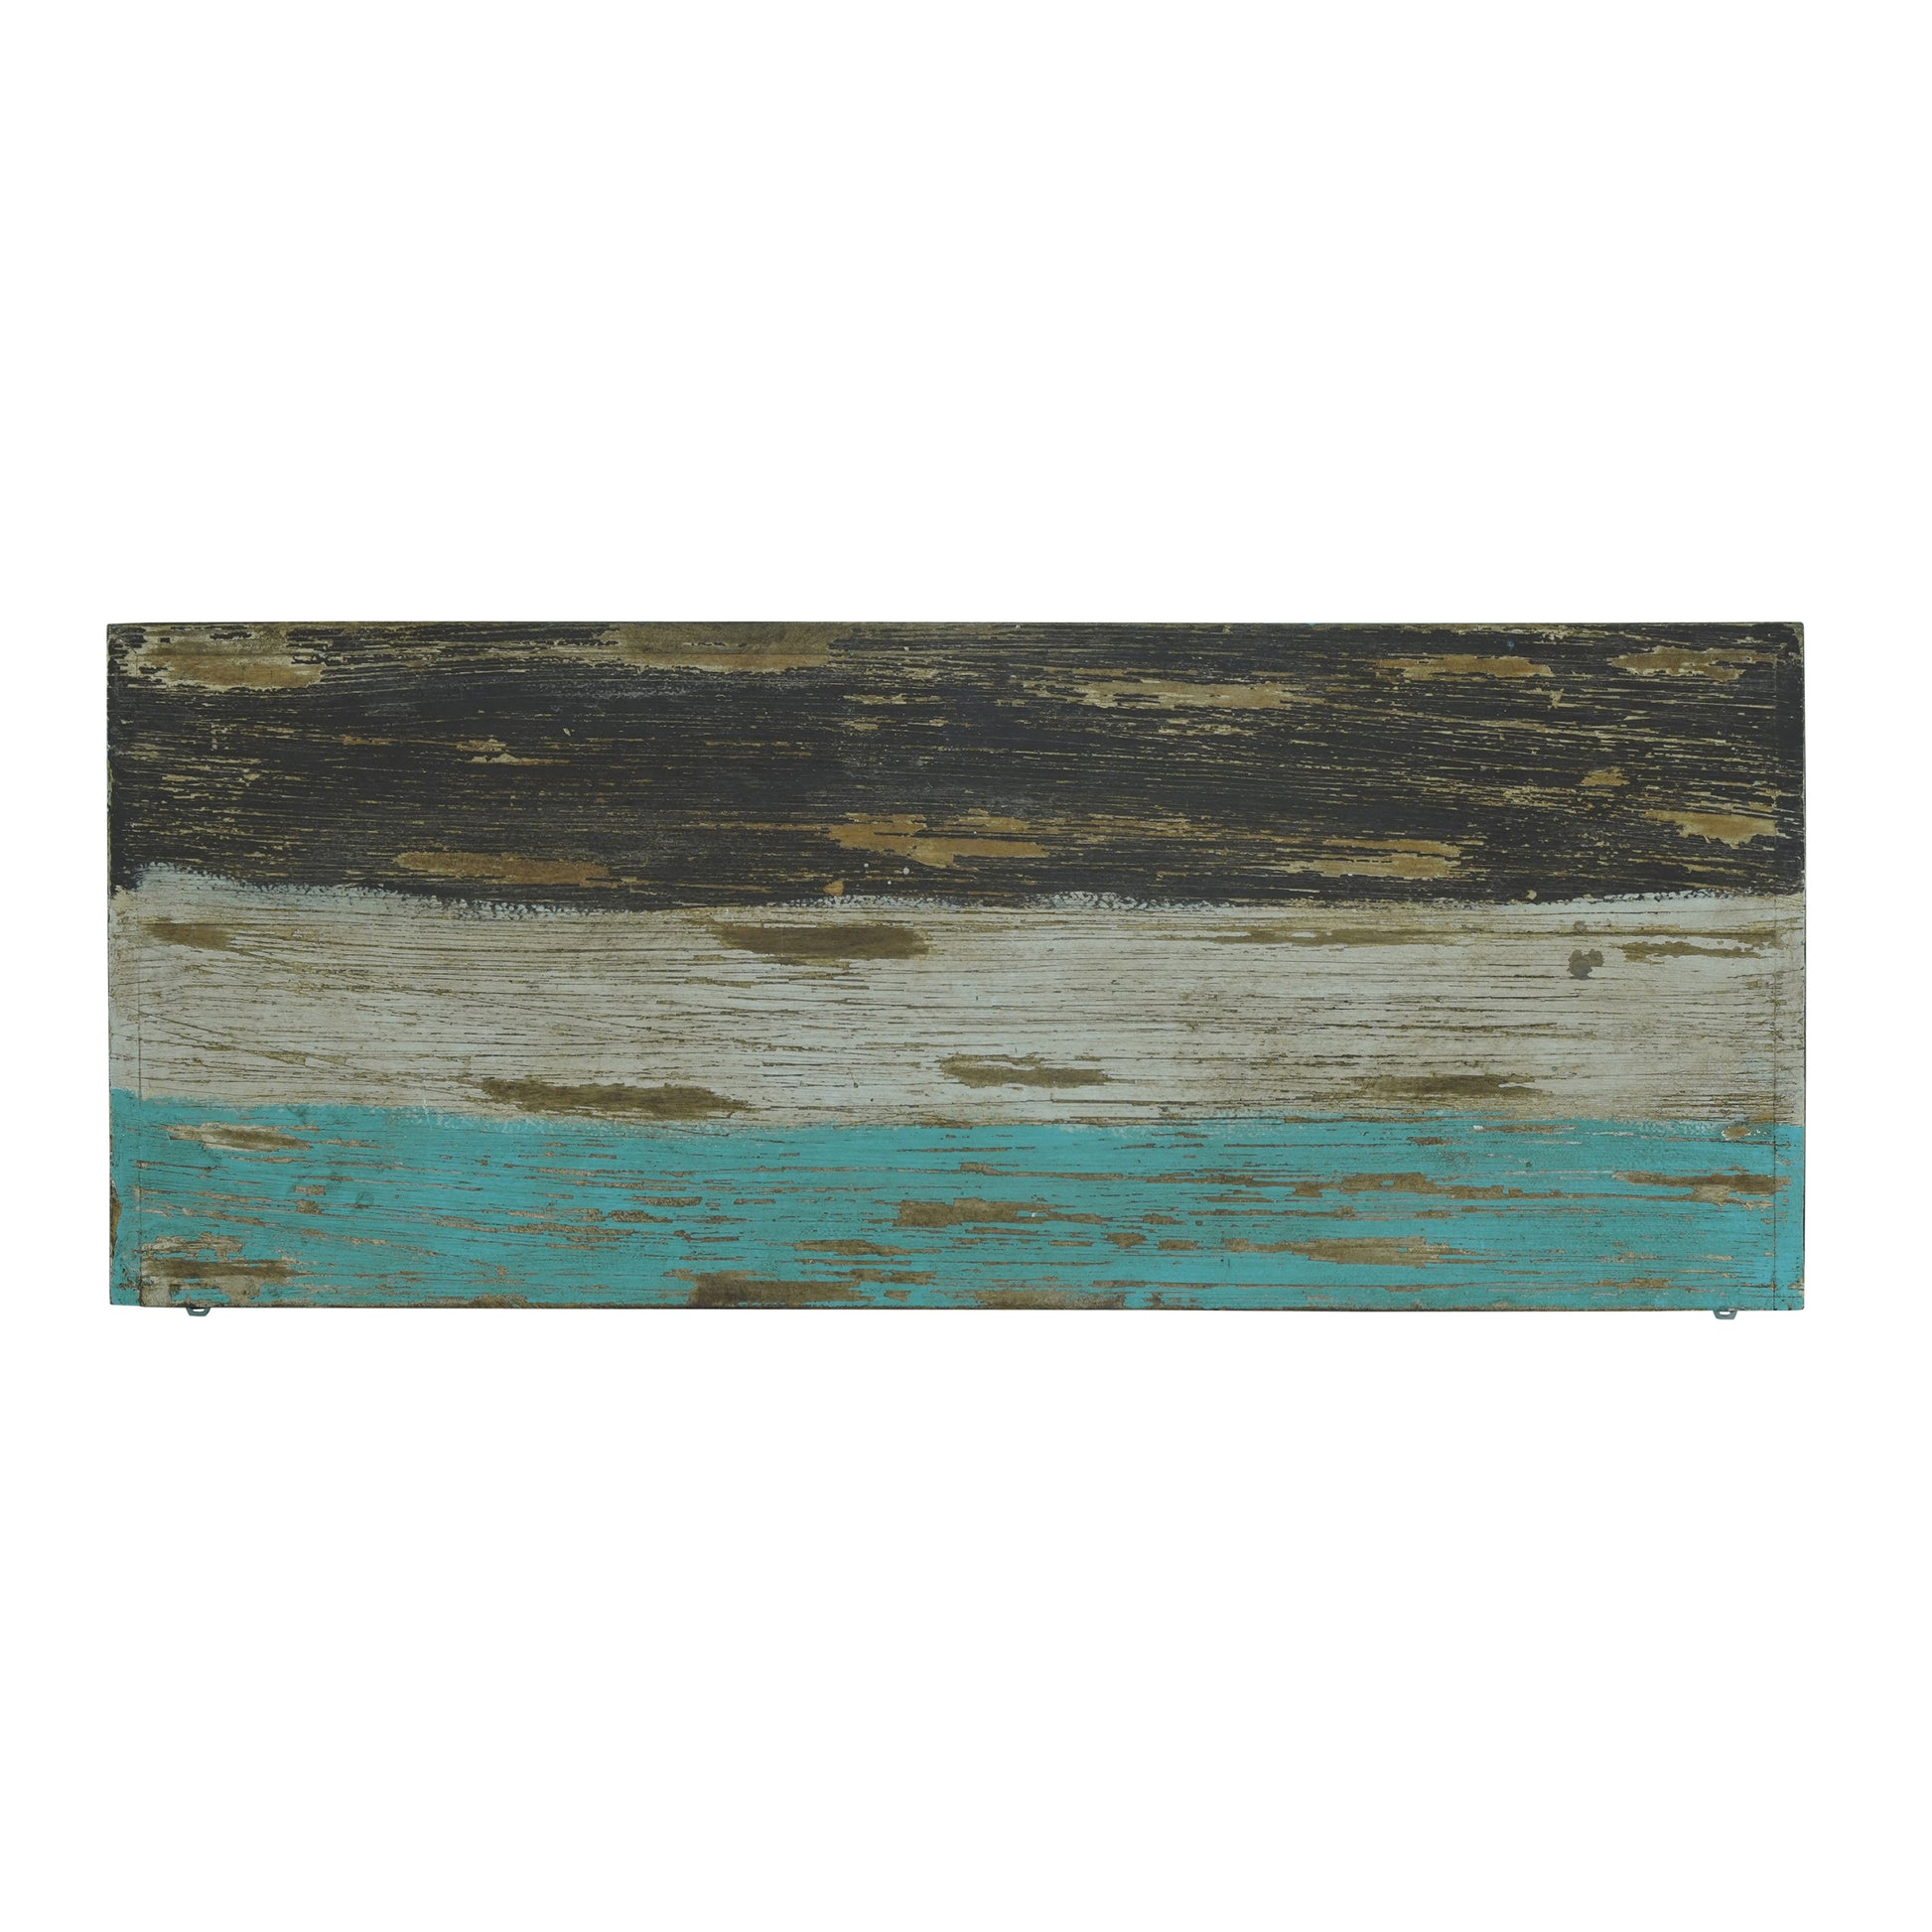 Sideboard - Multicolor Wood